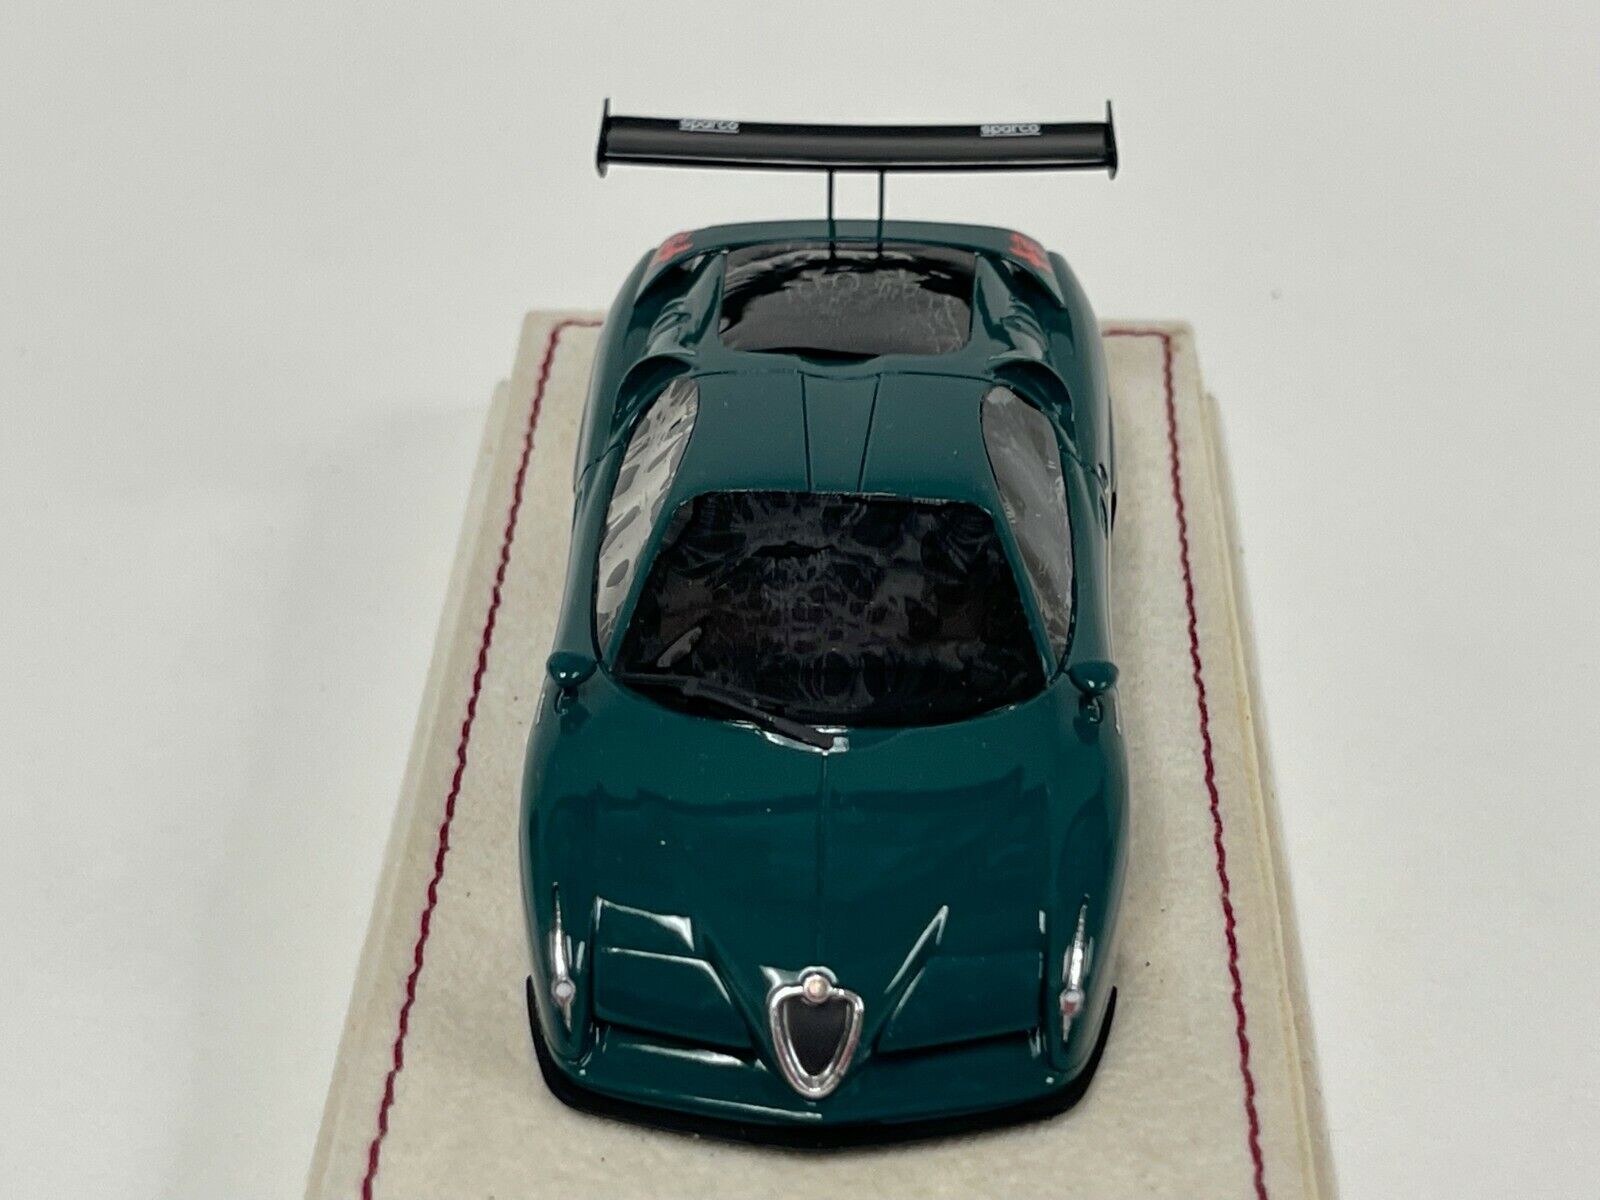 Alfa Romeo Scighera Wallpapers